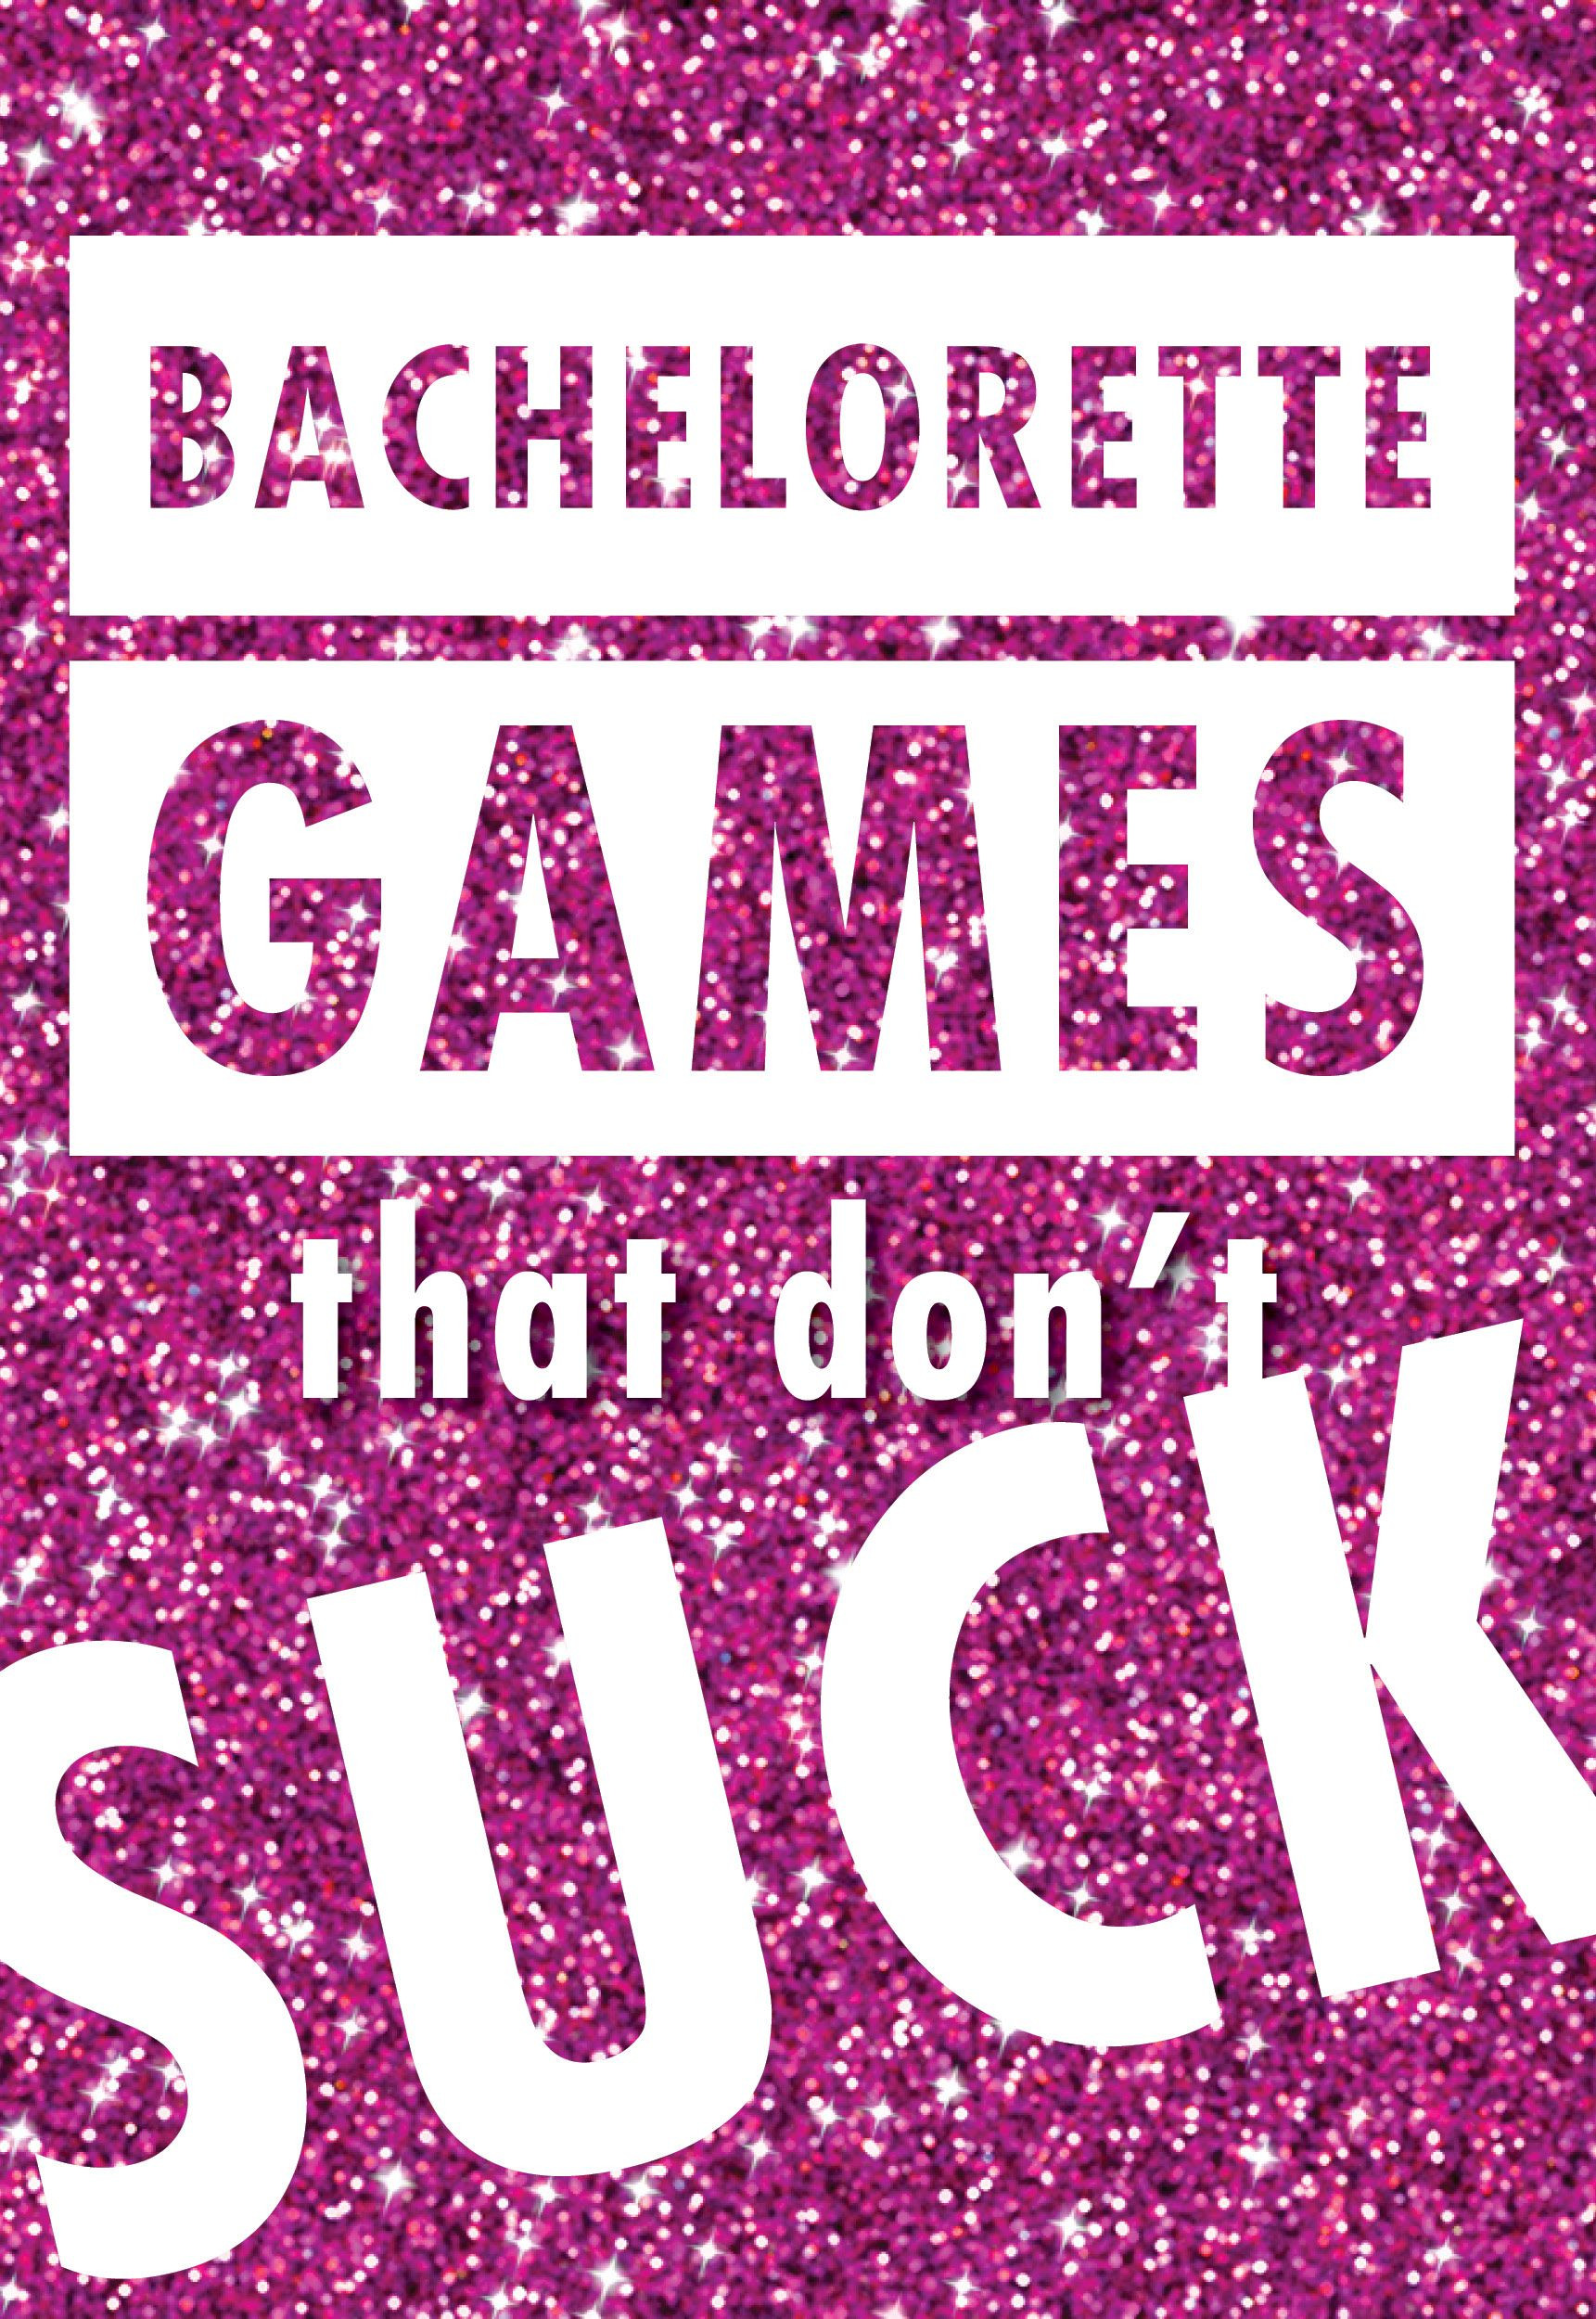 Bachelorette Party Activity Ideas
 8 Fun Bachelorette Party Games The Bride Will Actually